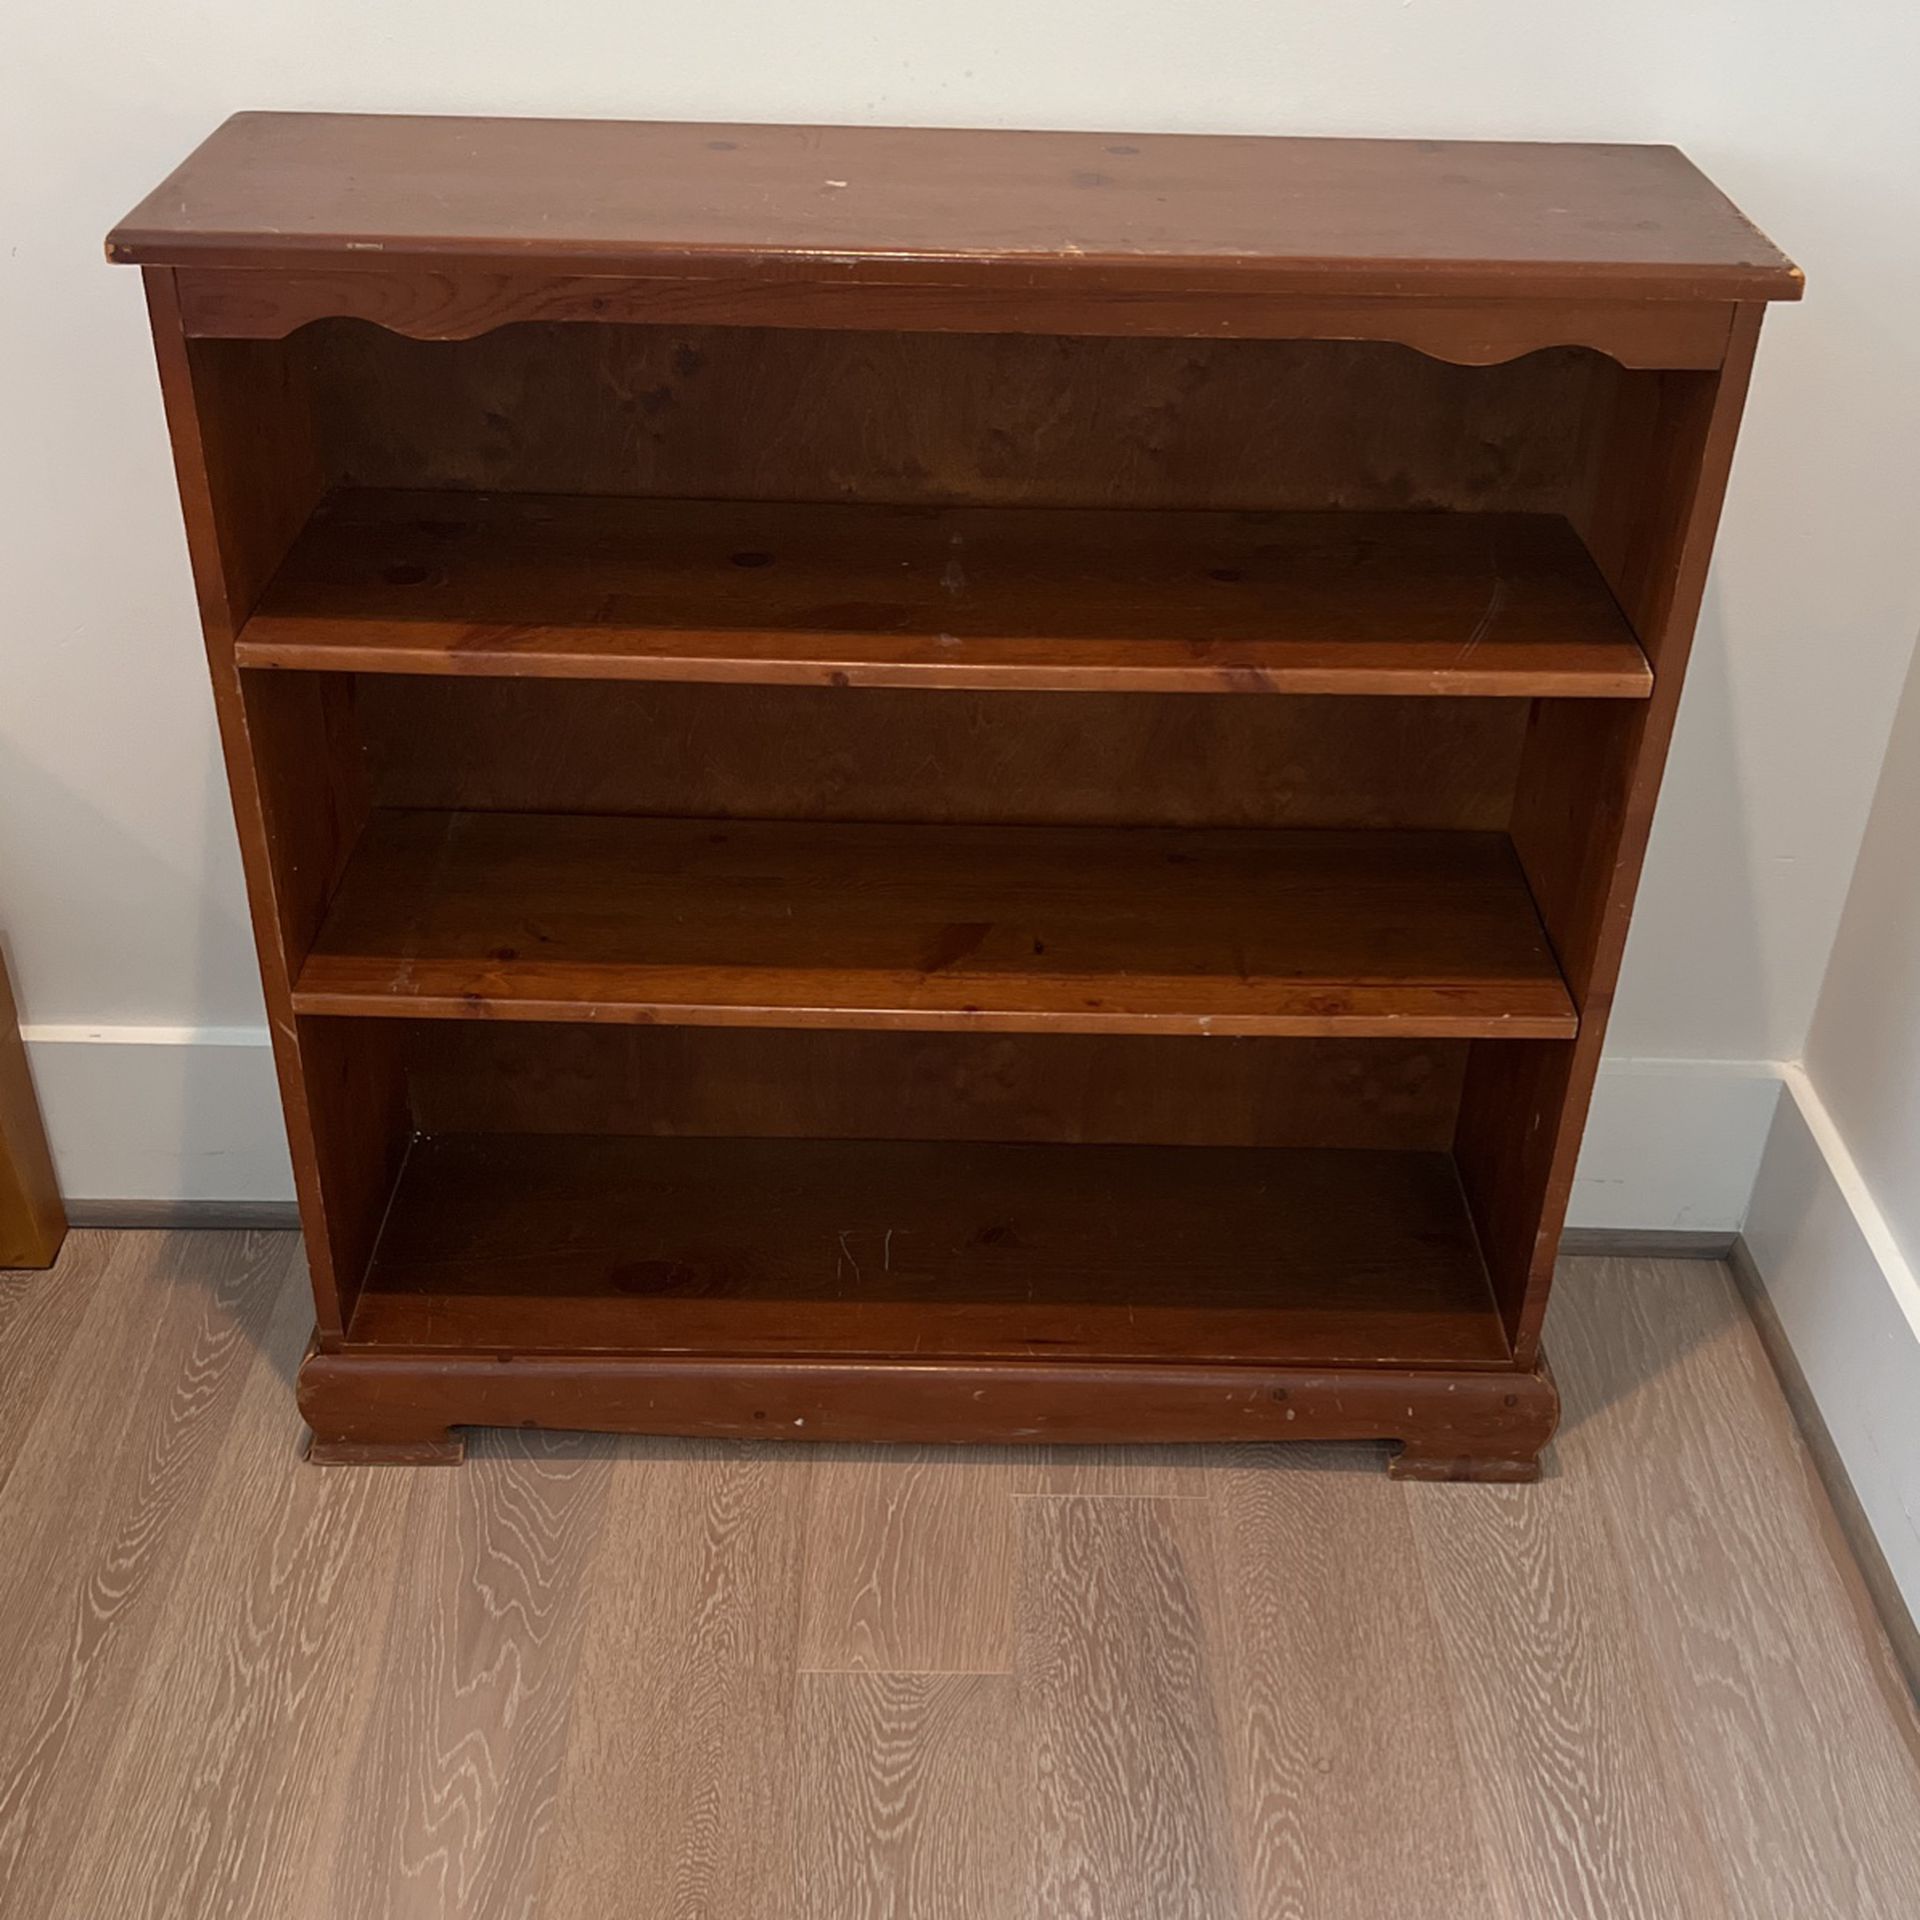 Wood Bookshelf/bookcase - FREE